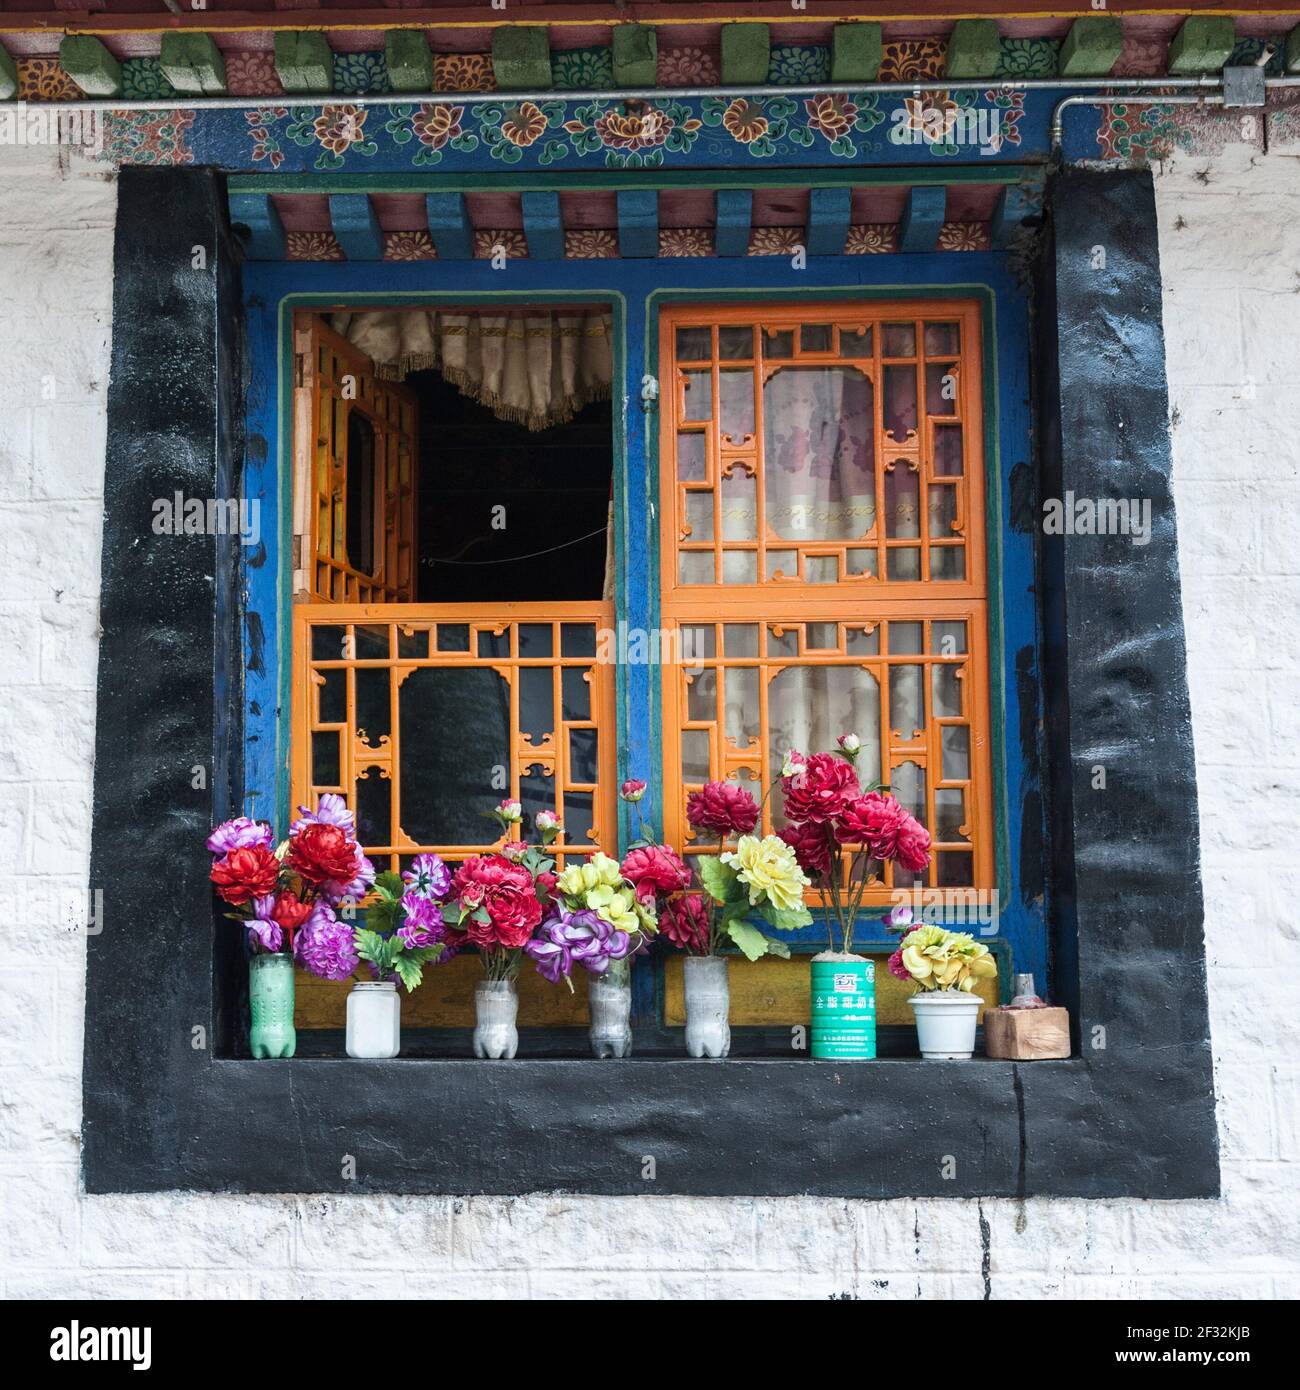 NYETANG, TIBET, CINA - AGOSTO, 16 2018: Finestra del Monastero di Drolma Lhakhang (Tempio di Nyetang), Nyetang, Tibet, Cina Foto Stock